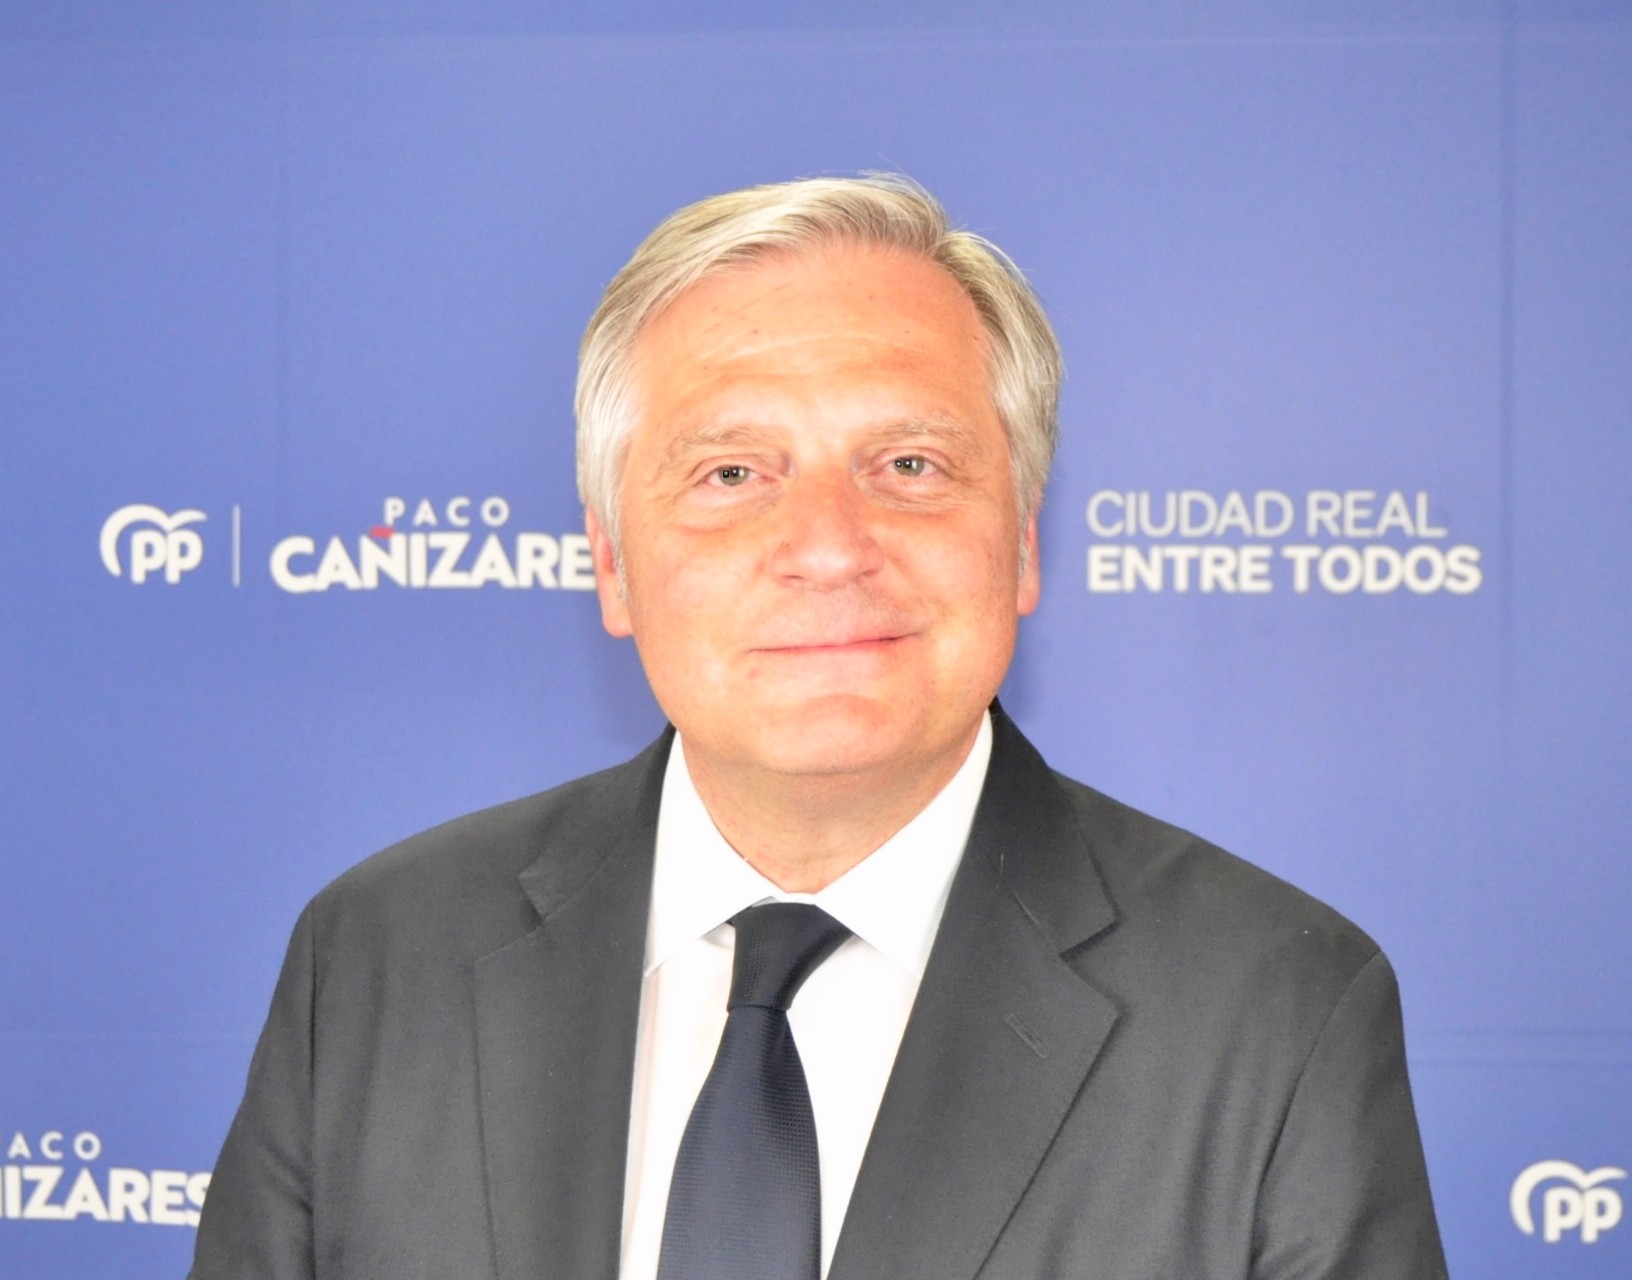 Paco Cañizares Jiménez